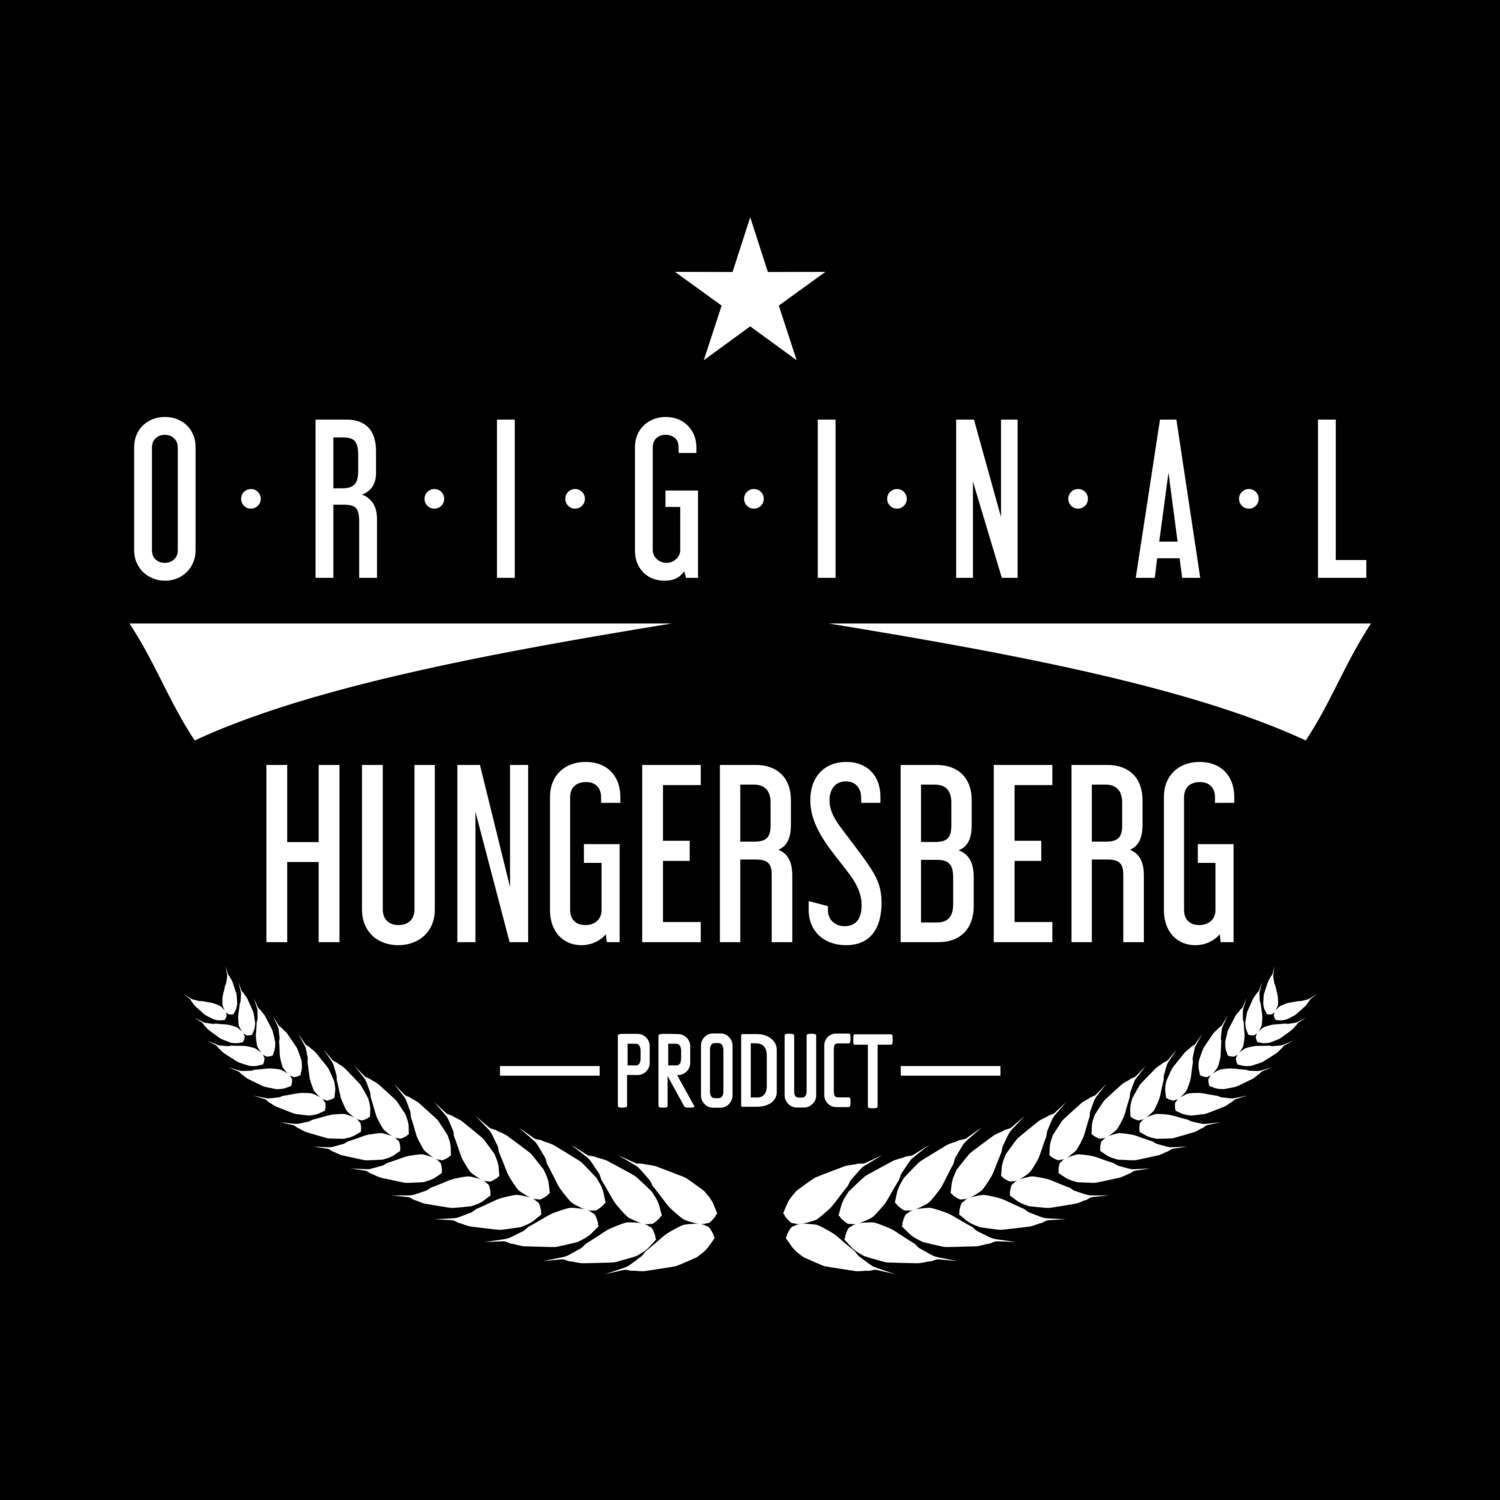 Hungersberg T-Shirt »Original Product«